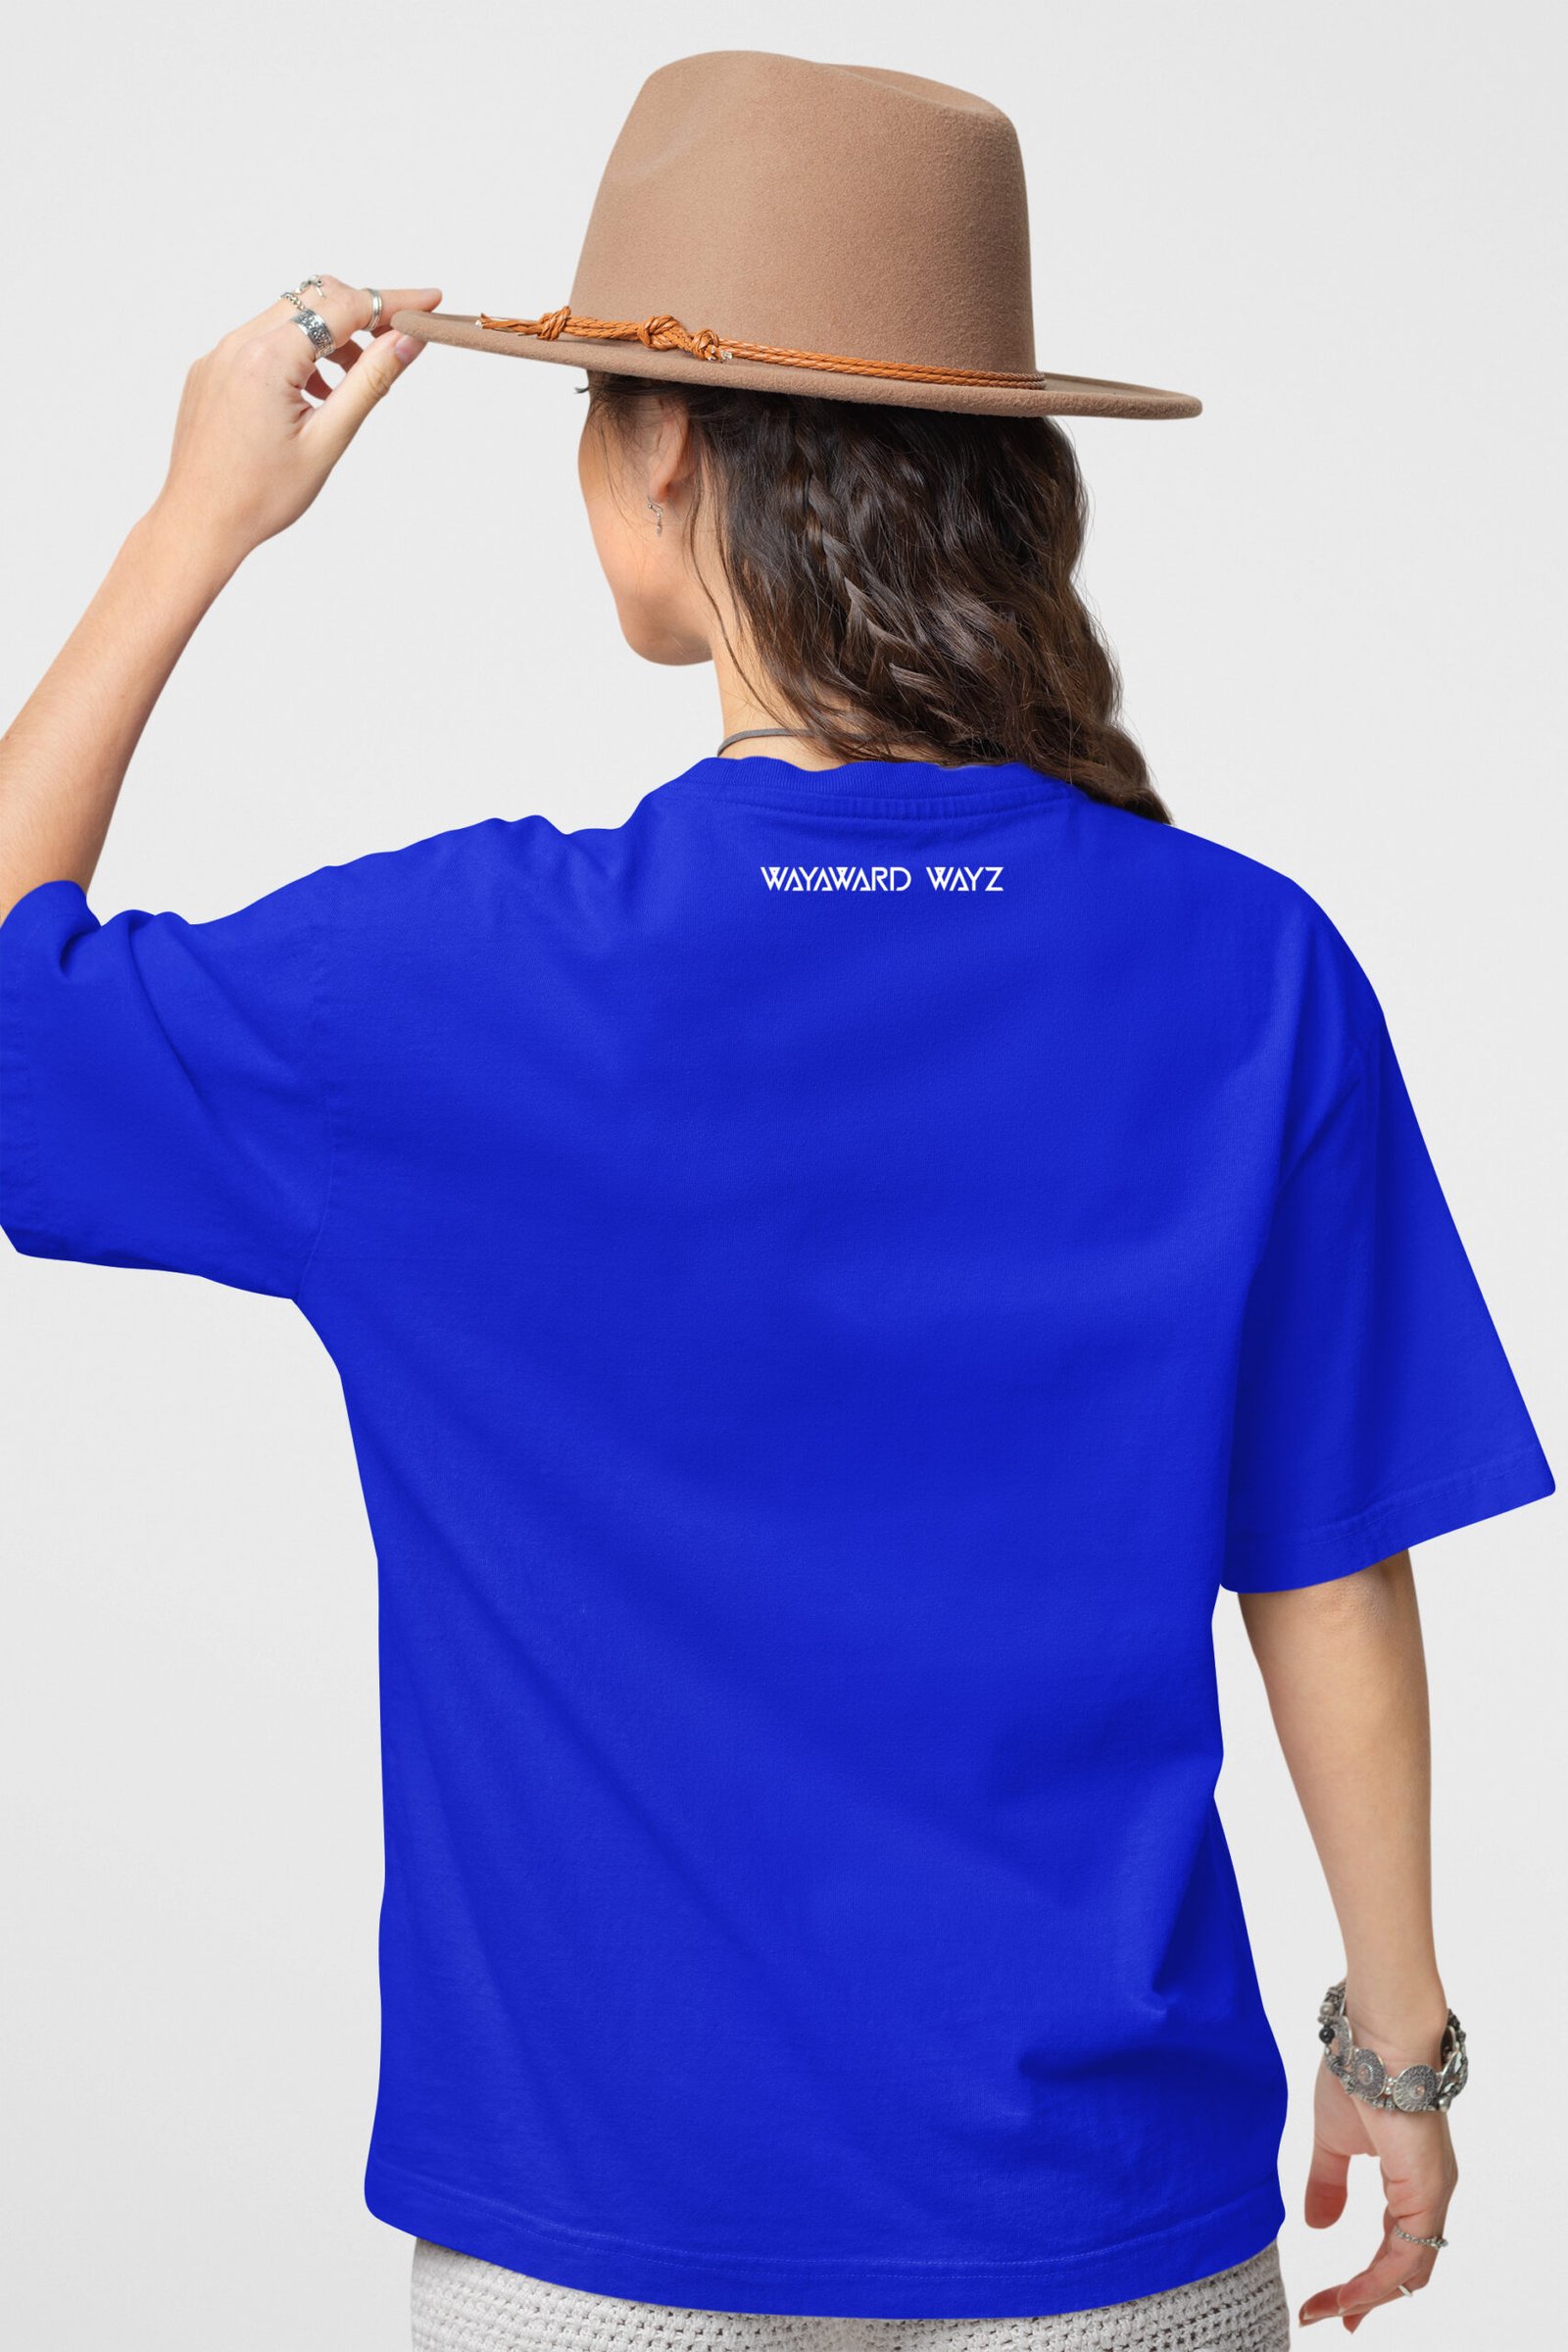 Wayward Wayz Solid T-Shirt Royal Blue-model back